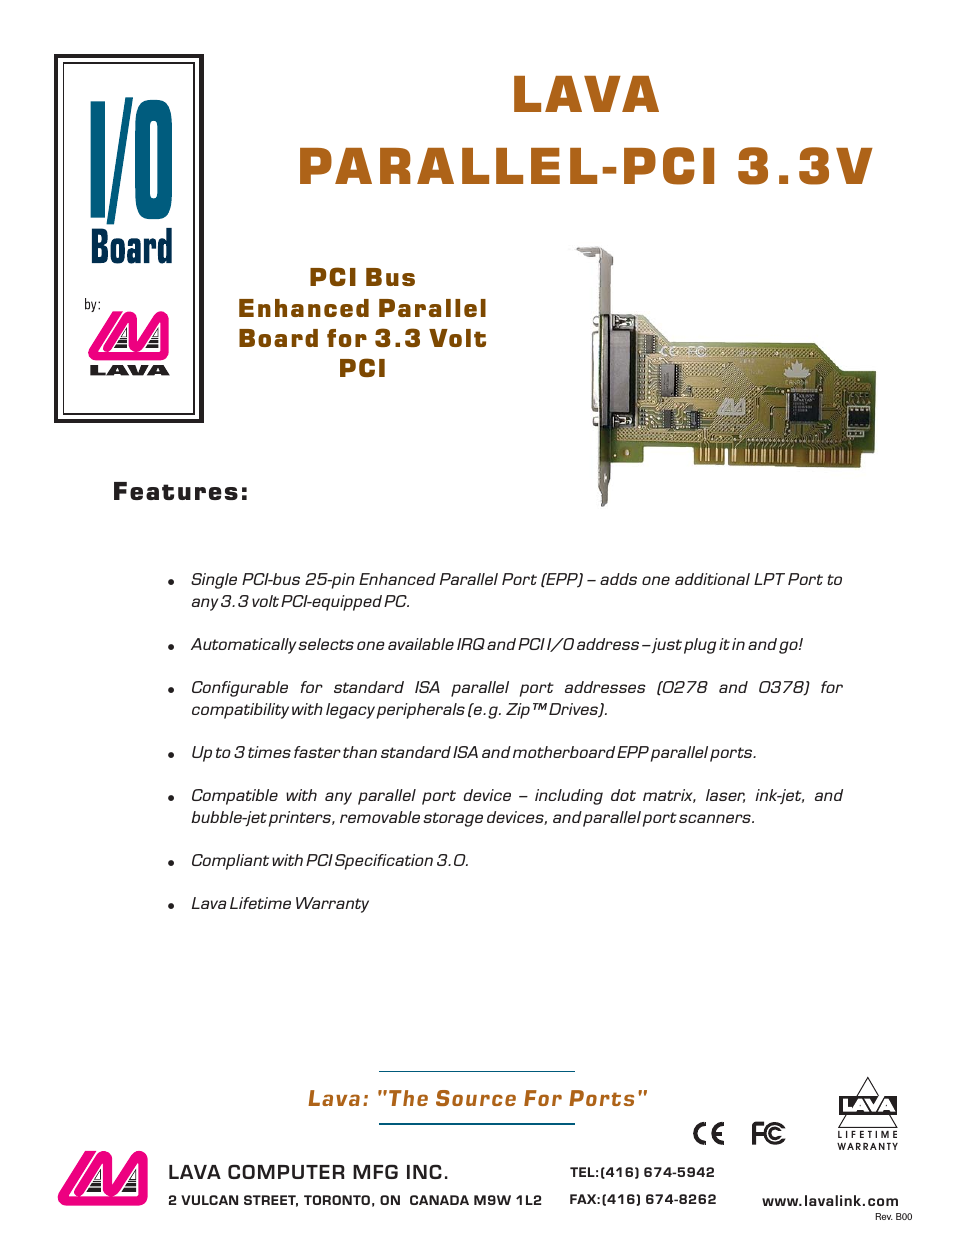 PCI Bus Enhanced Parallel Board